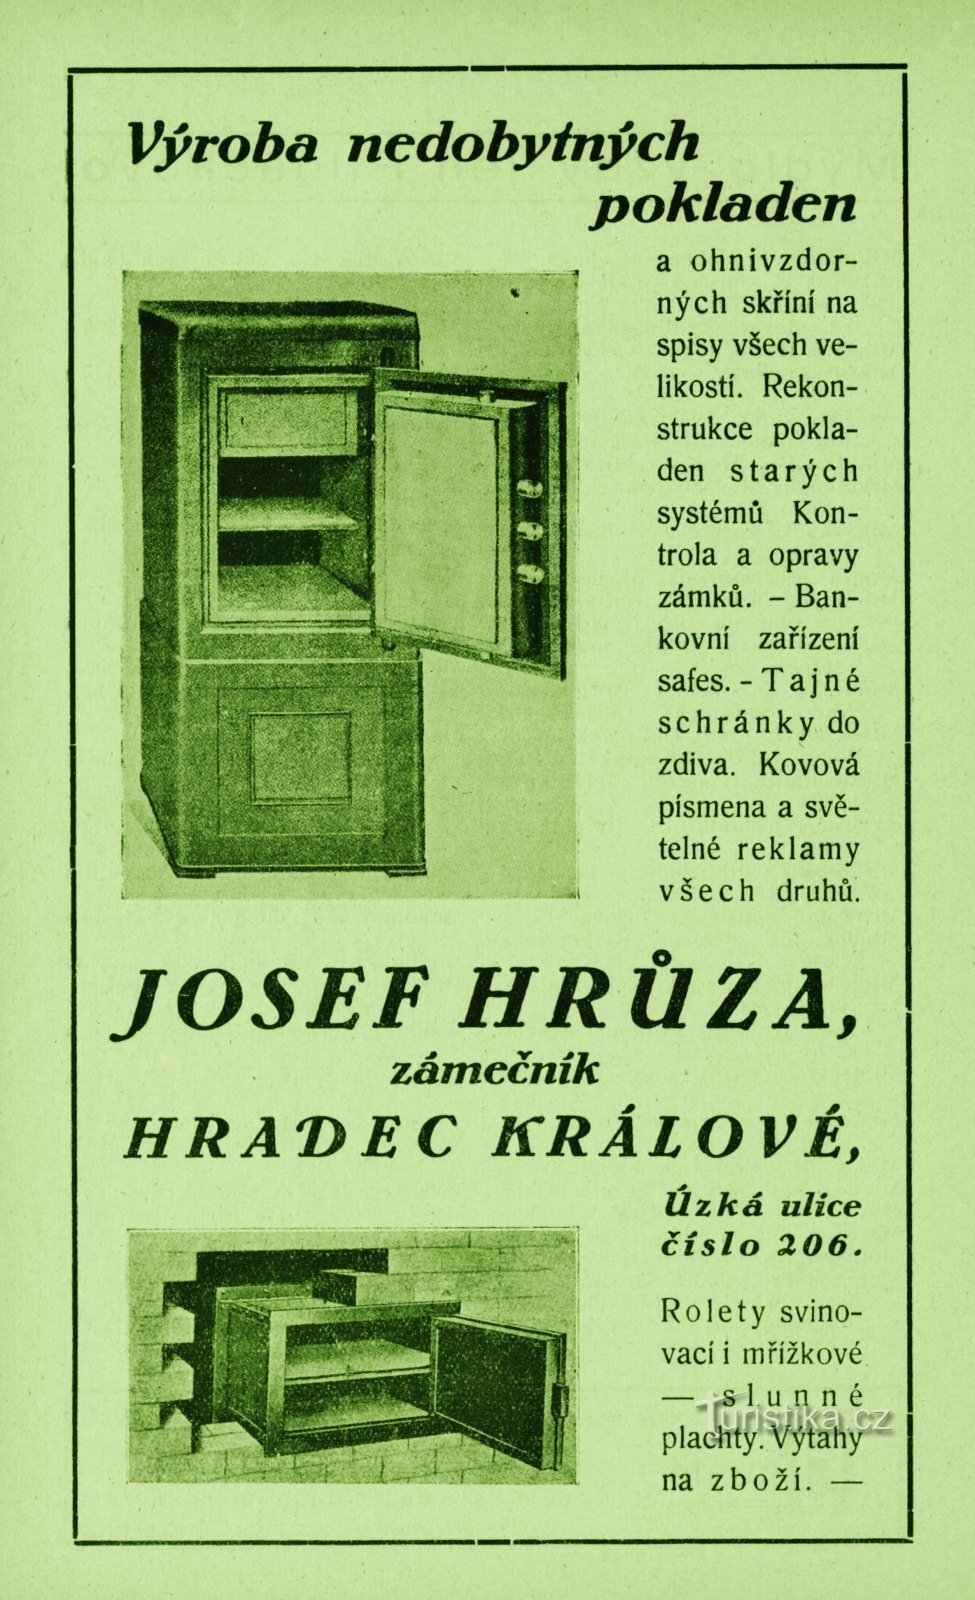 Hedendaagse advertentie van Josef Hrůza's slotenmakerswerkplaats uit 1931